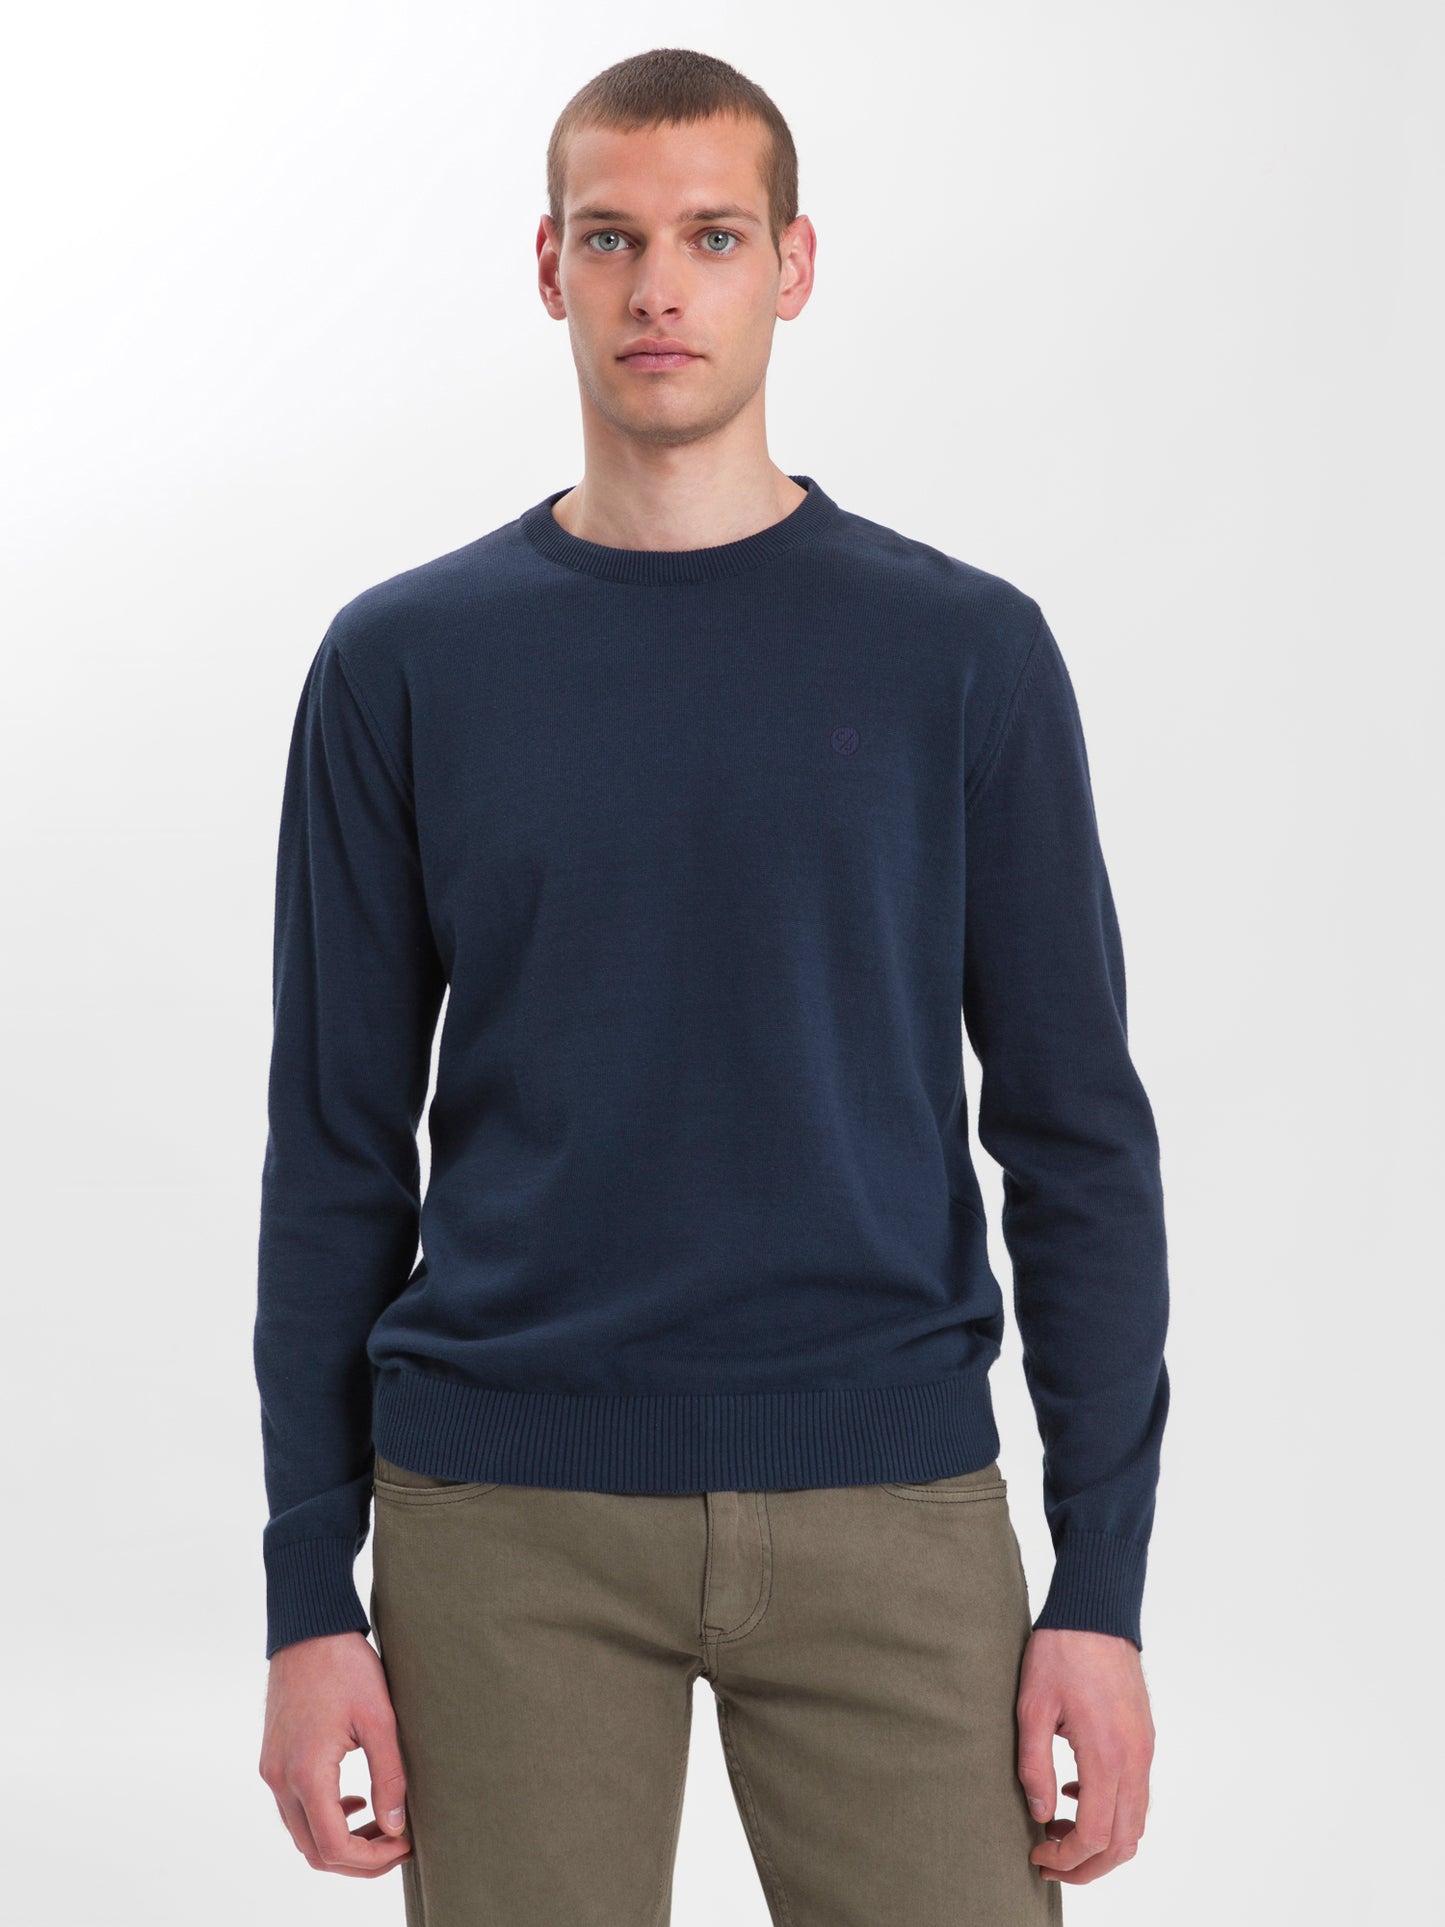 Men's regular fine knit sweater navy blue